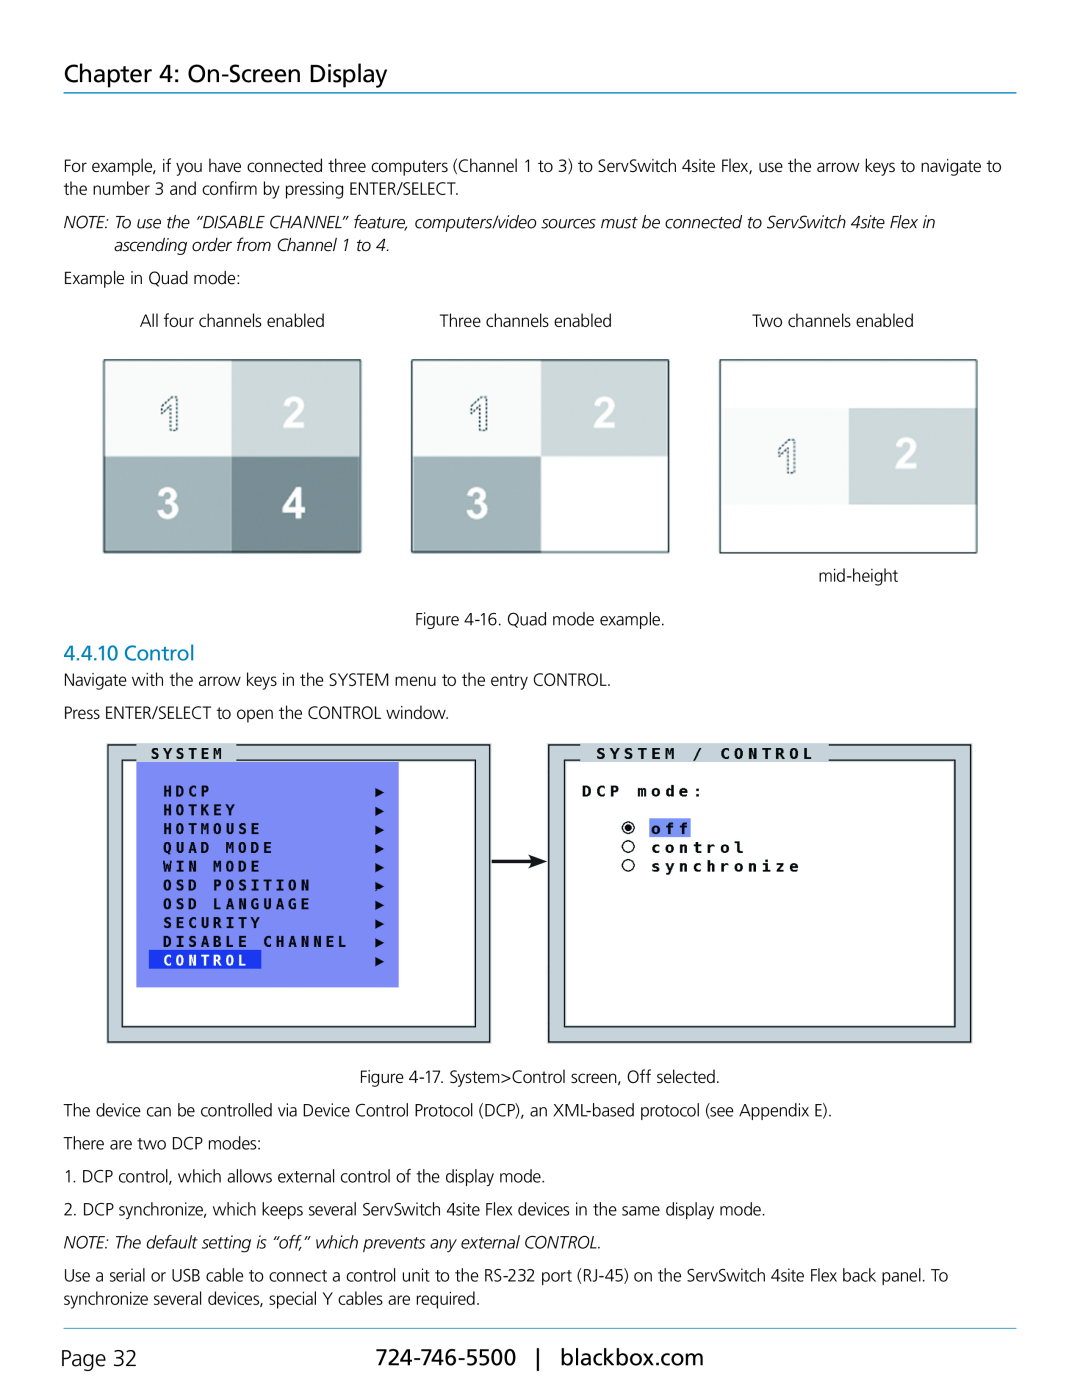 Black Box KVP40004A, servswitch 4site flex manual Control, On-Screen Display, Page 